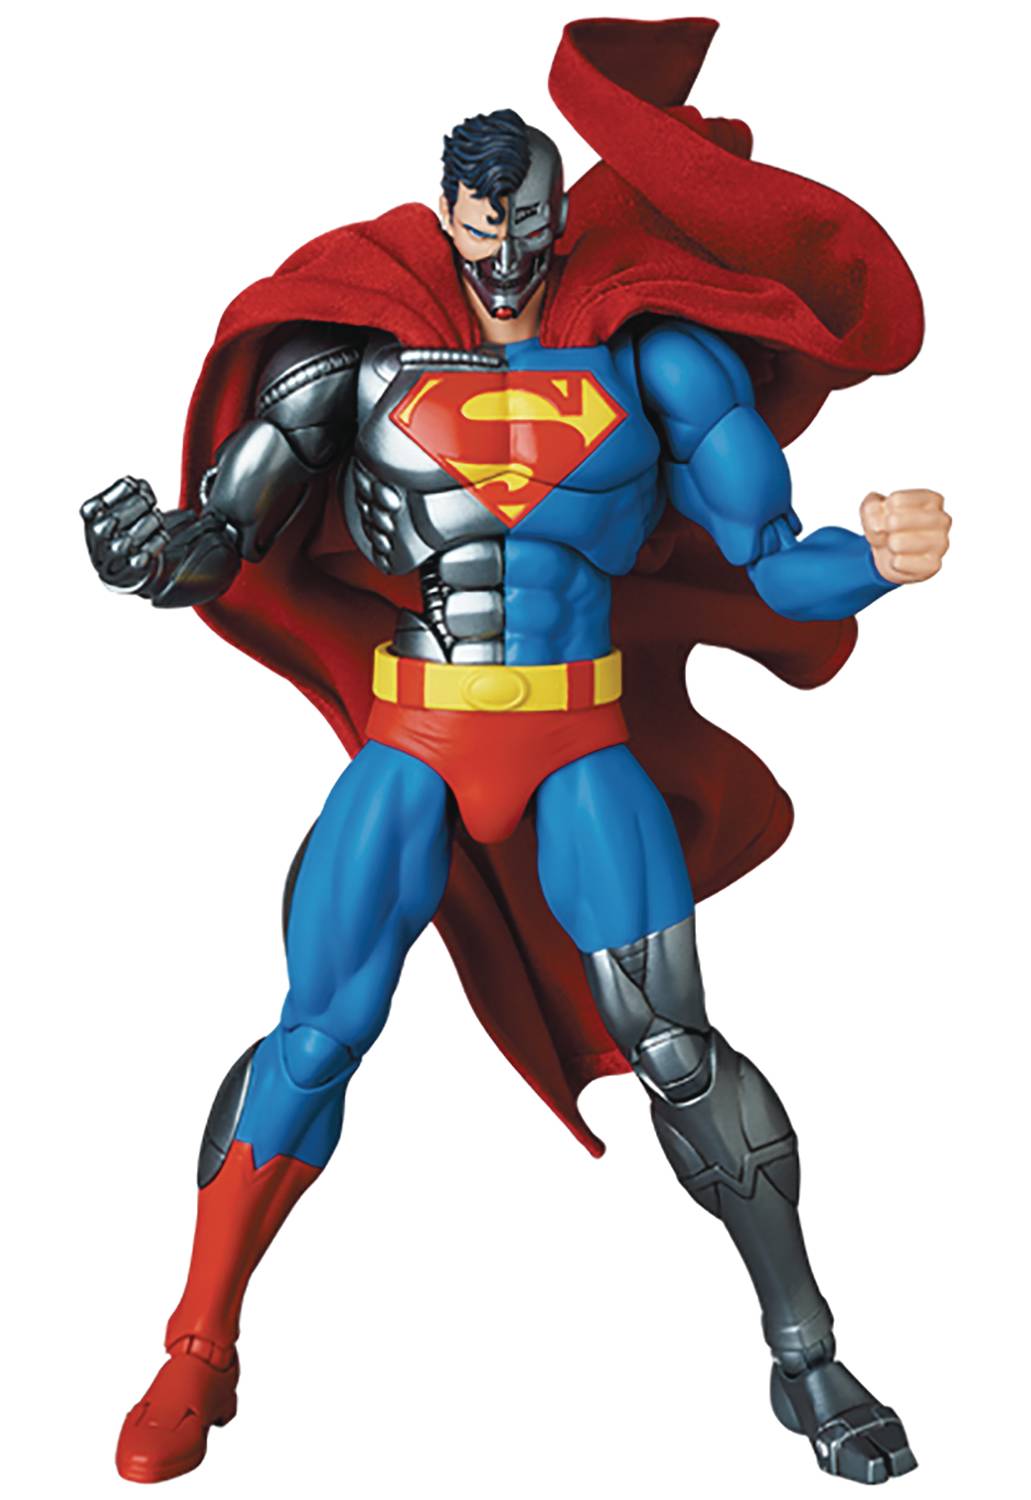 RETURN OF SUPERMAN CYBORG SUPERMAN MAFEX AF